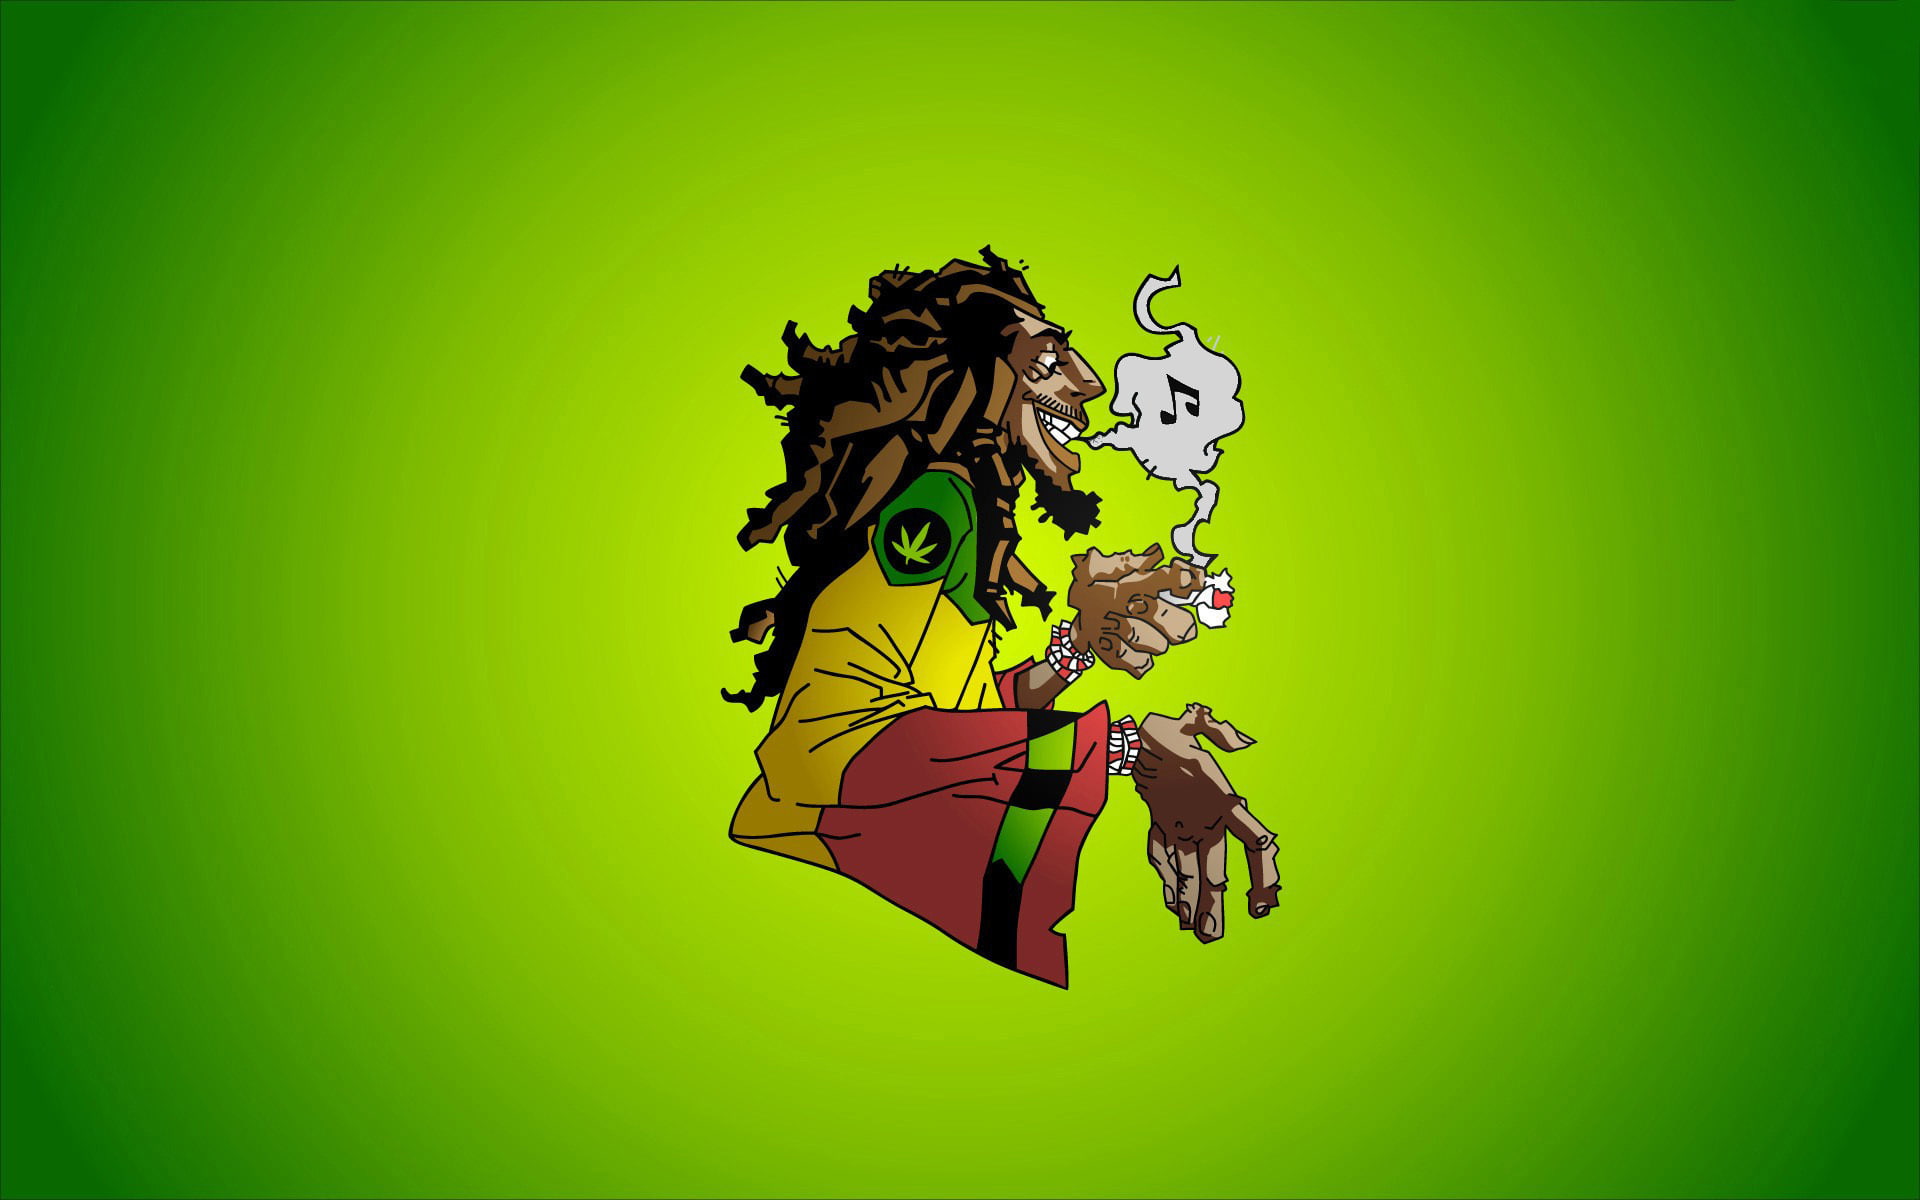 music, smoke, Bob Marley, Jamaica, marijuana, reggae, dreadlocks